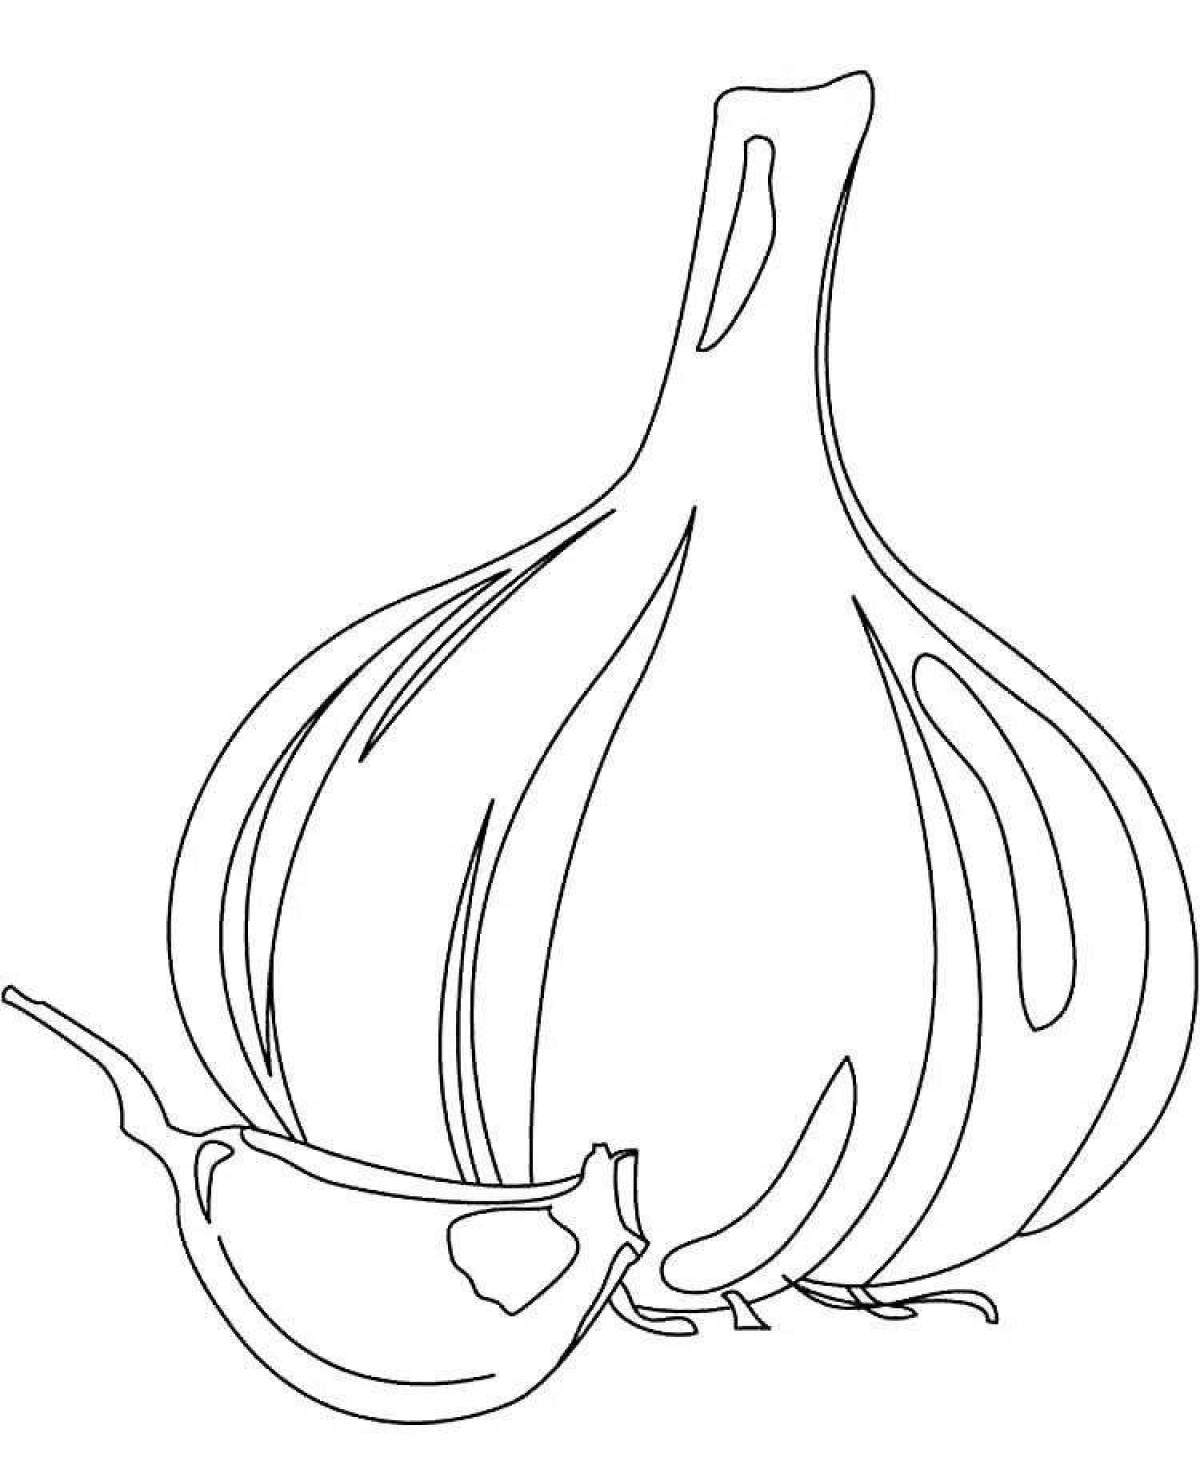 Artistic coloring of garlic